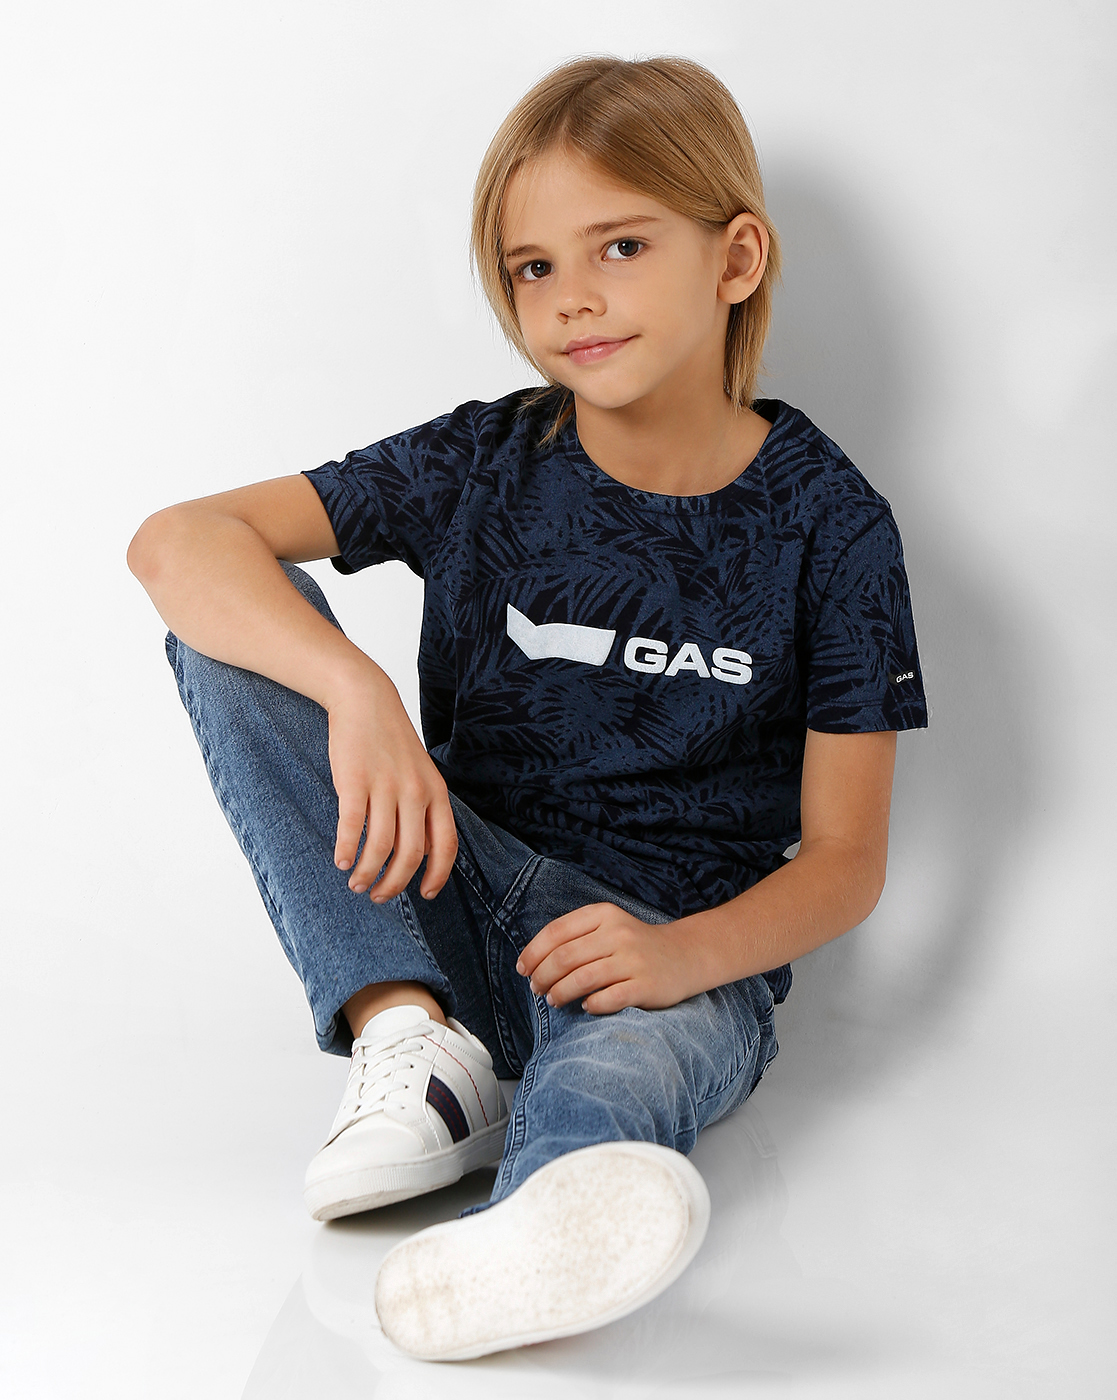 GAS KIDS Boys Printed Dark Blue T-Shirt